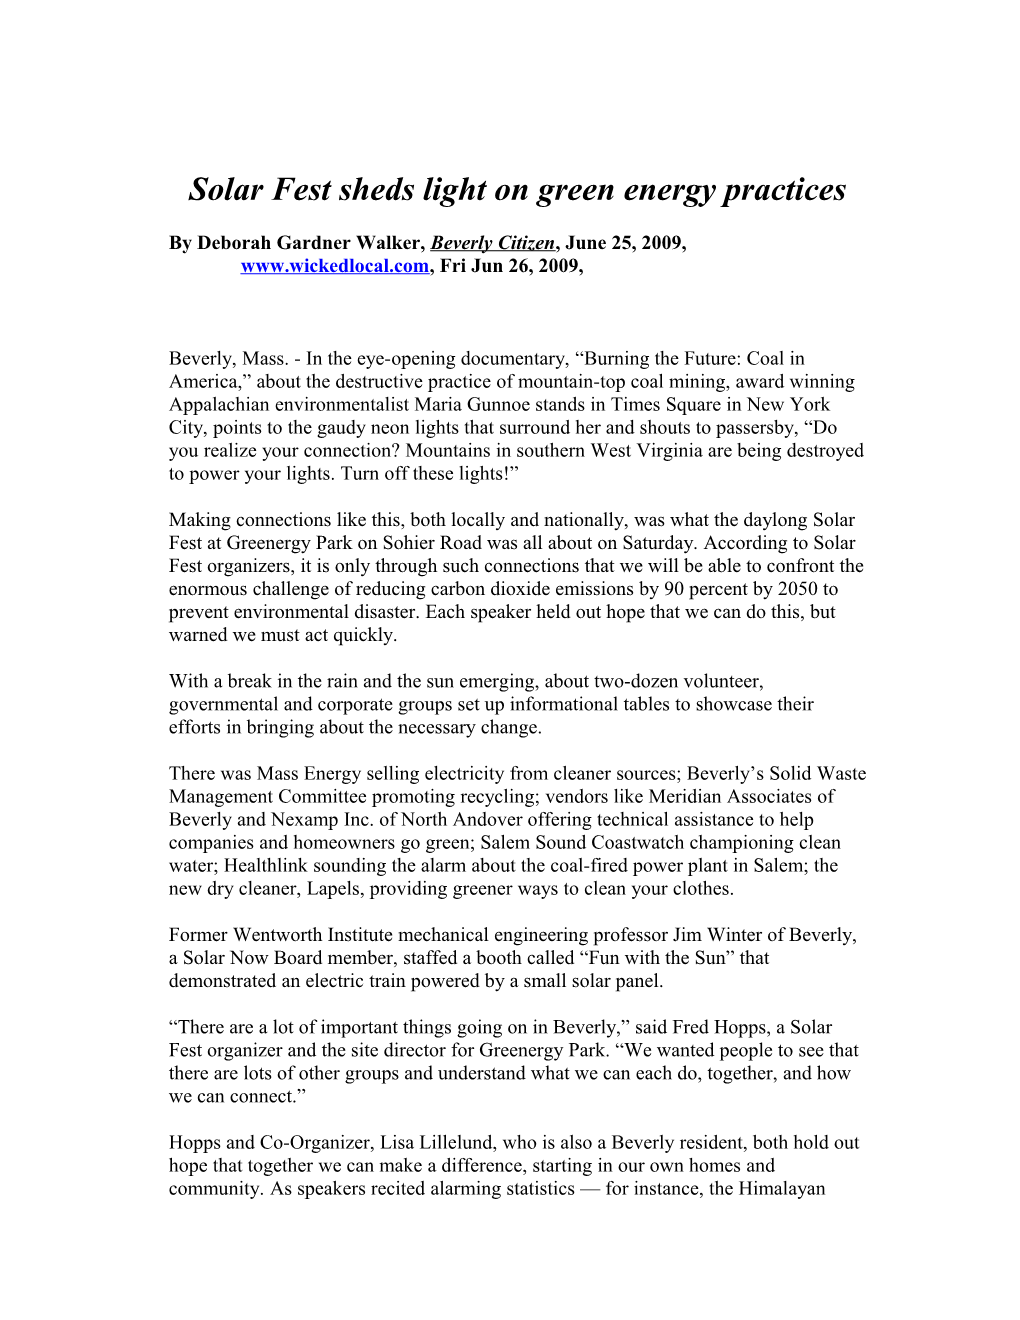 Solar Fest Sheds Light on Green Energy Practices